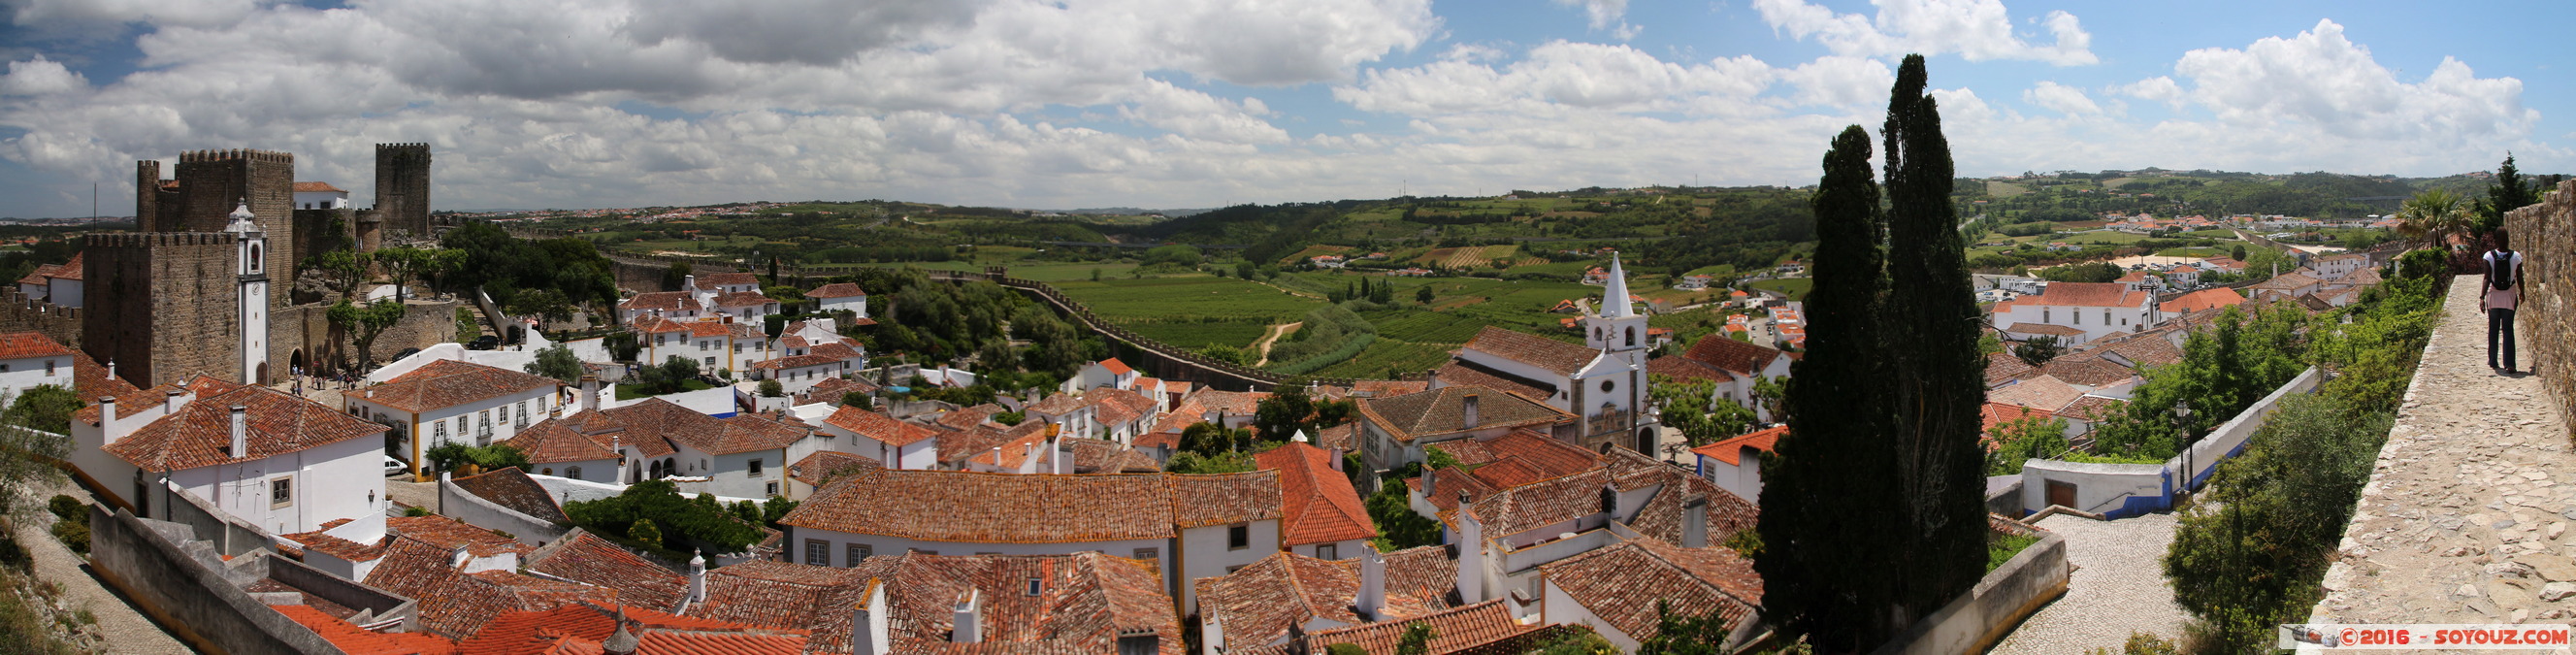 Obidos - panorama
Mots-clés: A-Da-Gorda geo:lat=39.36186700 geo:lon=-9.15804767 geotagged Leiria bidos Portugal PRT Cidade murada panorama